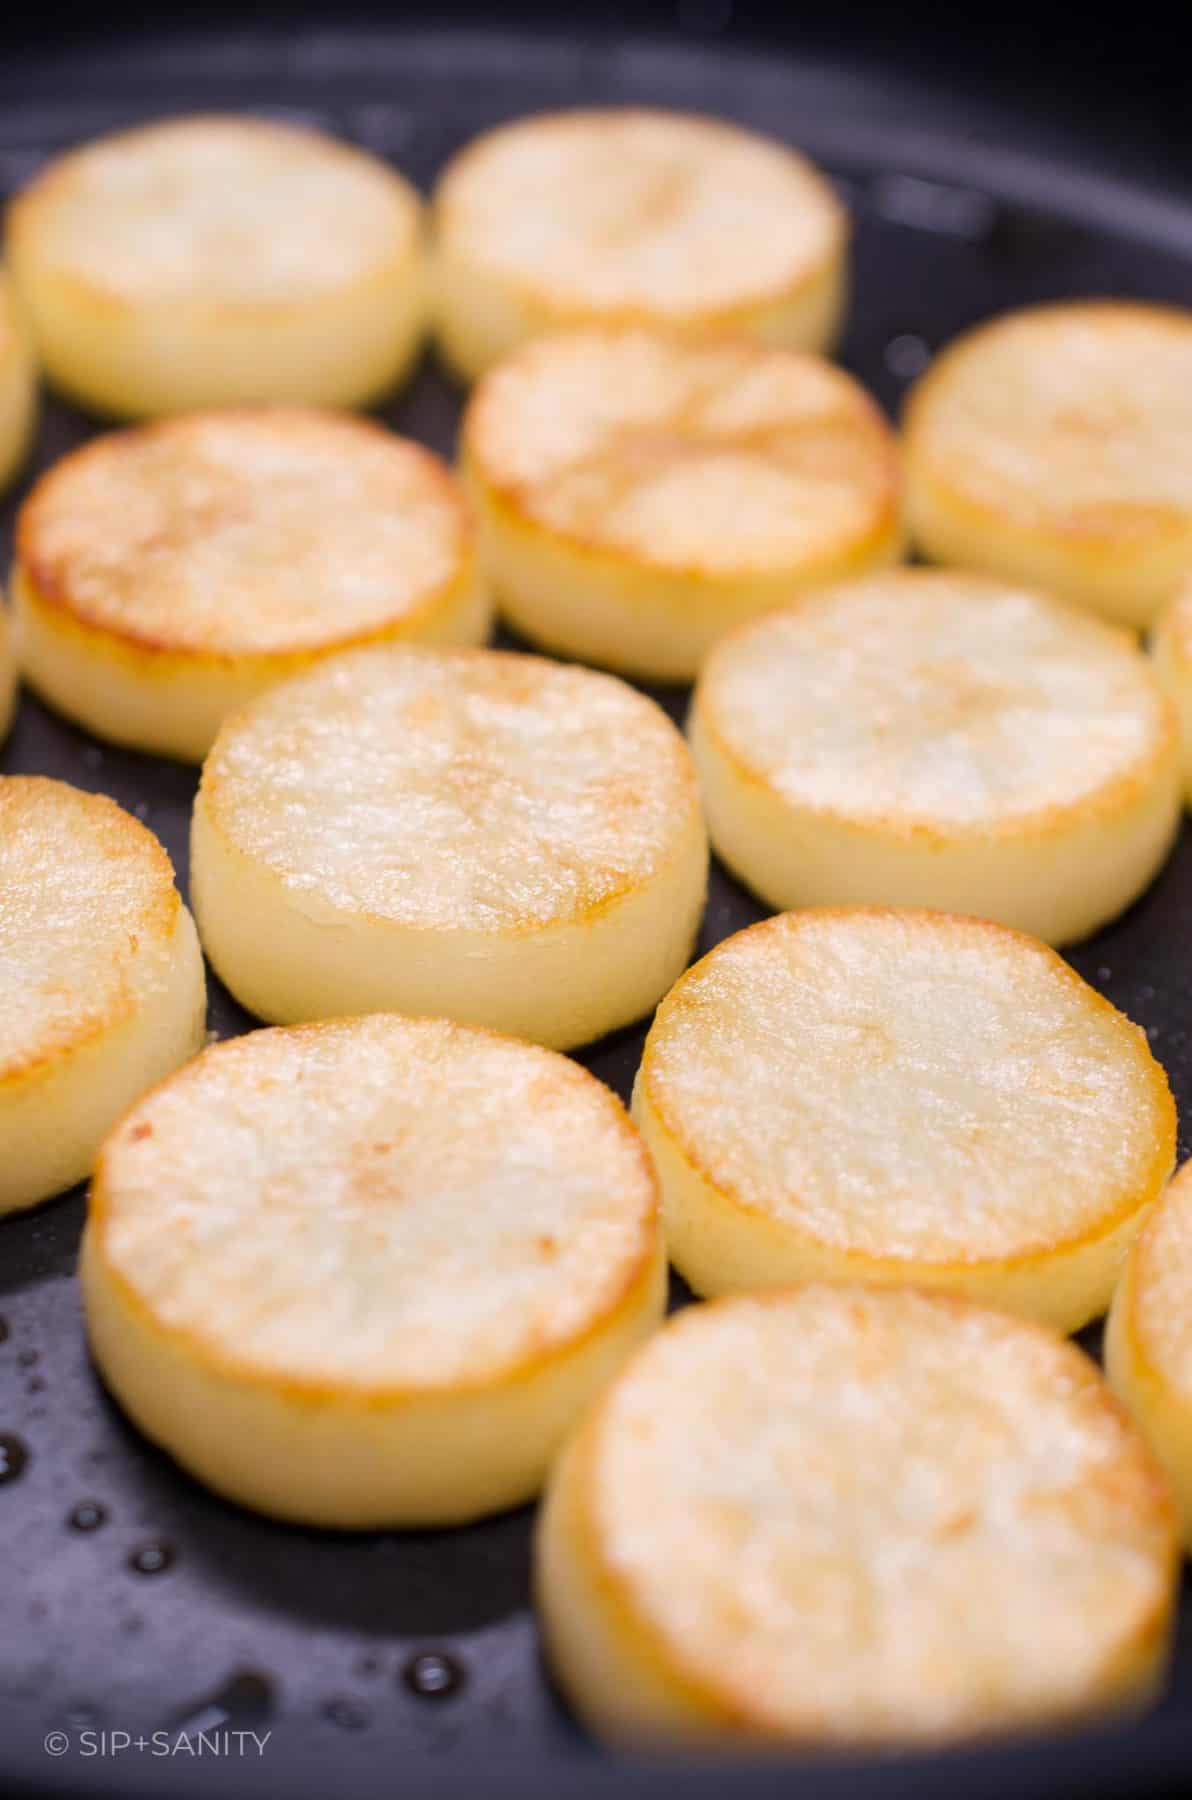 Circles of russet potatoes sautéing in a nonstick skillet.